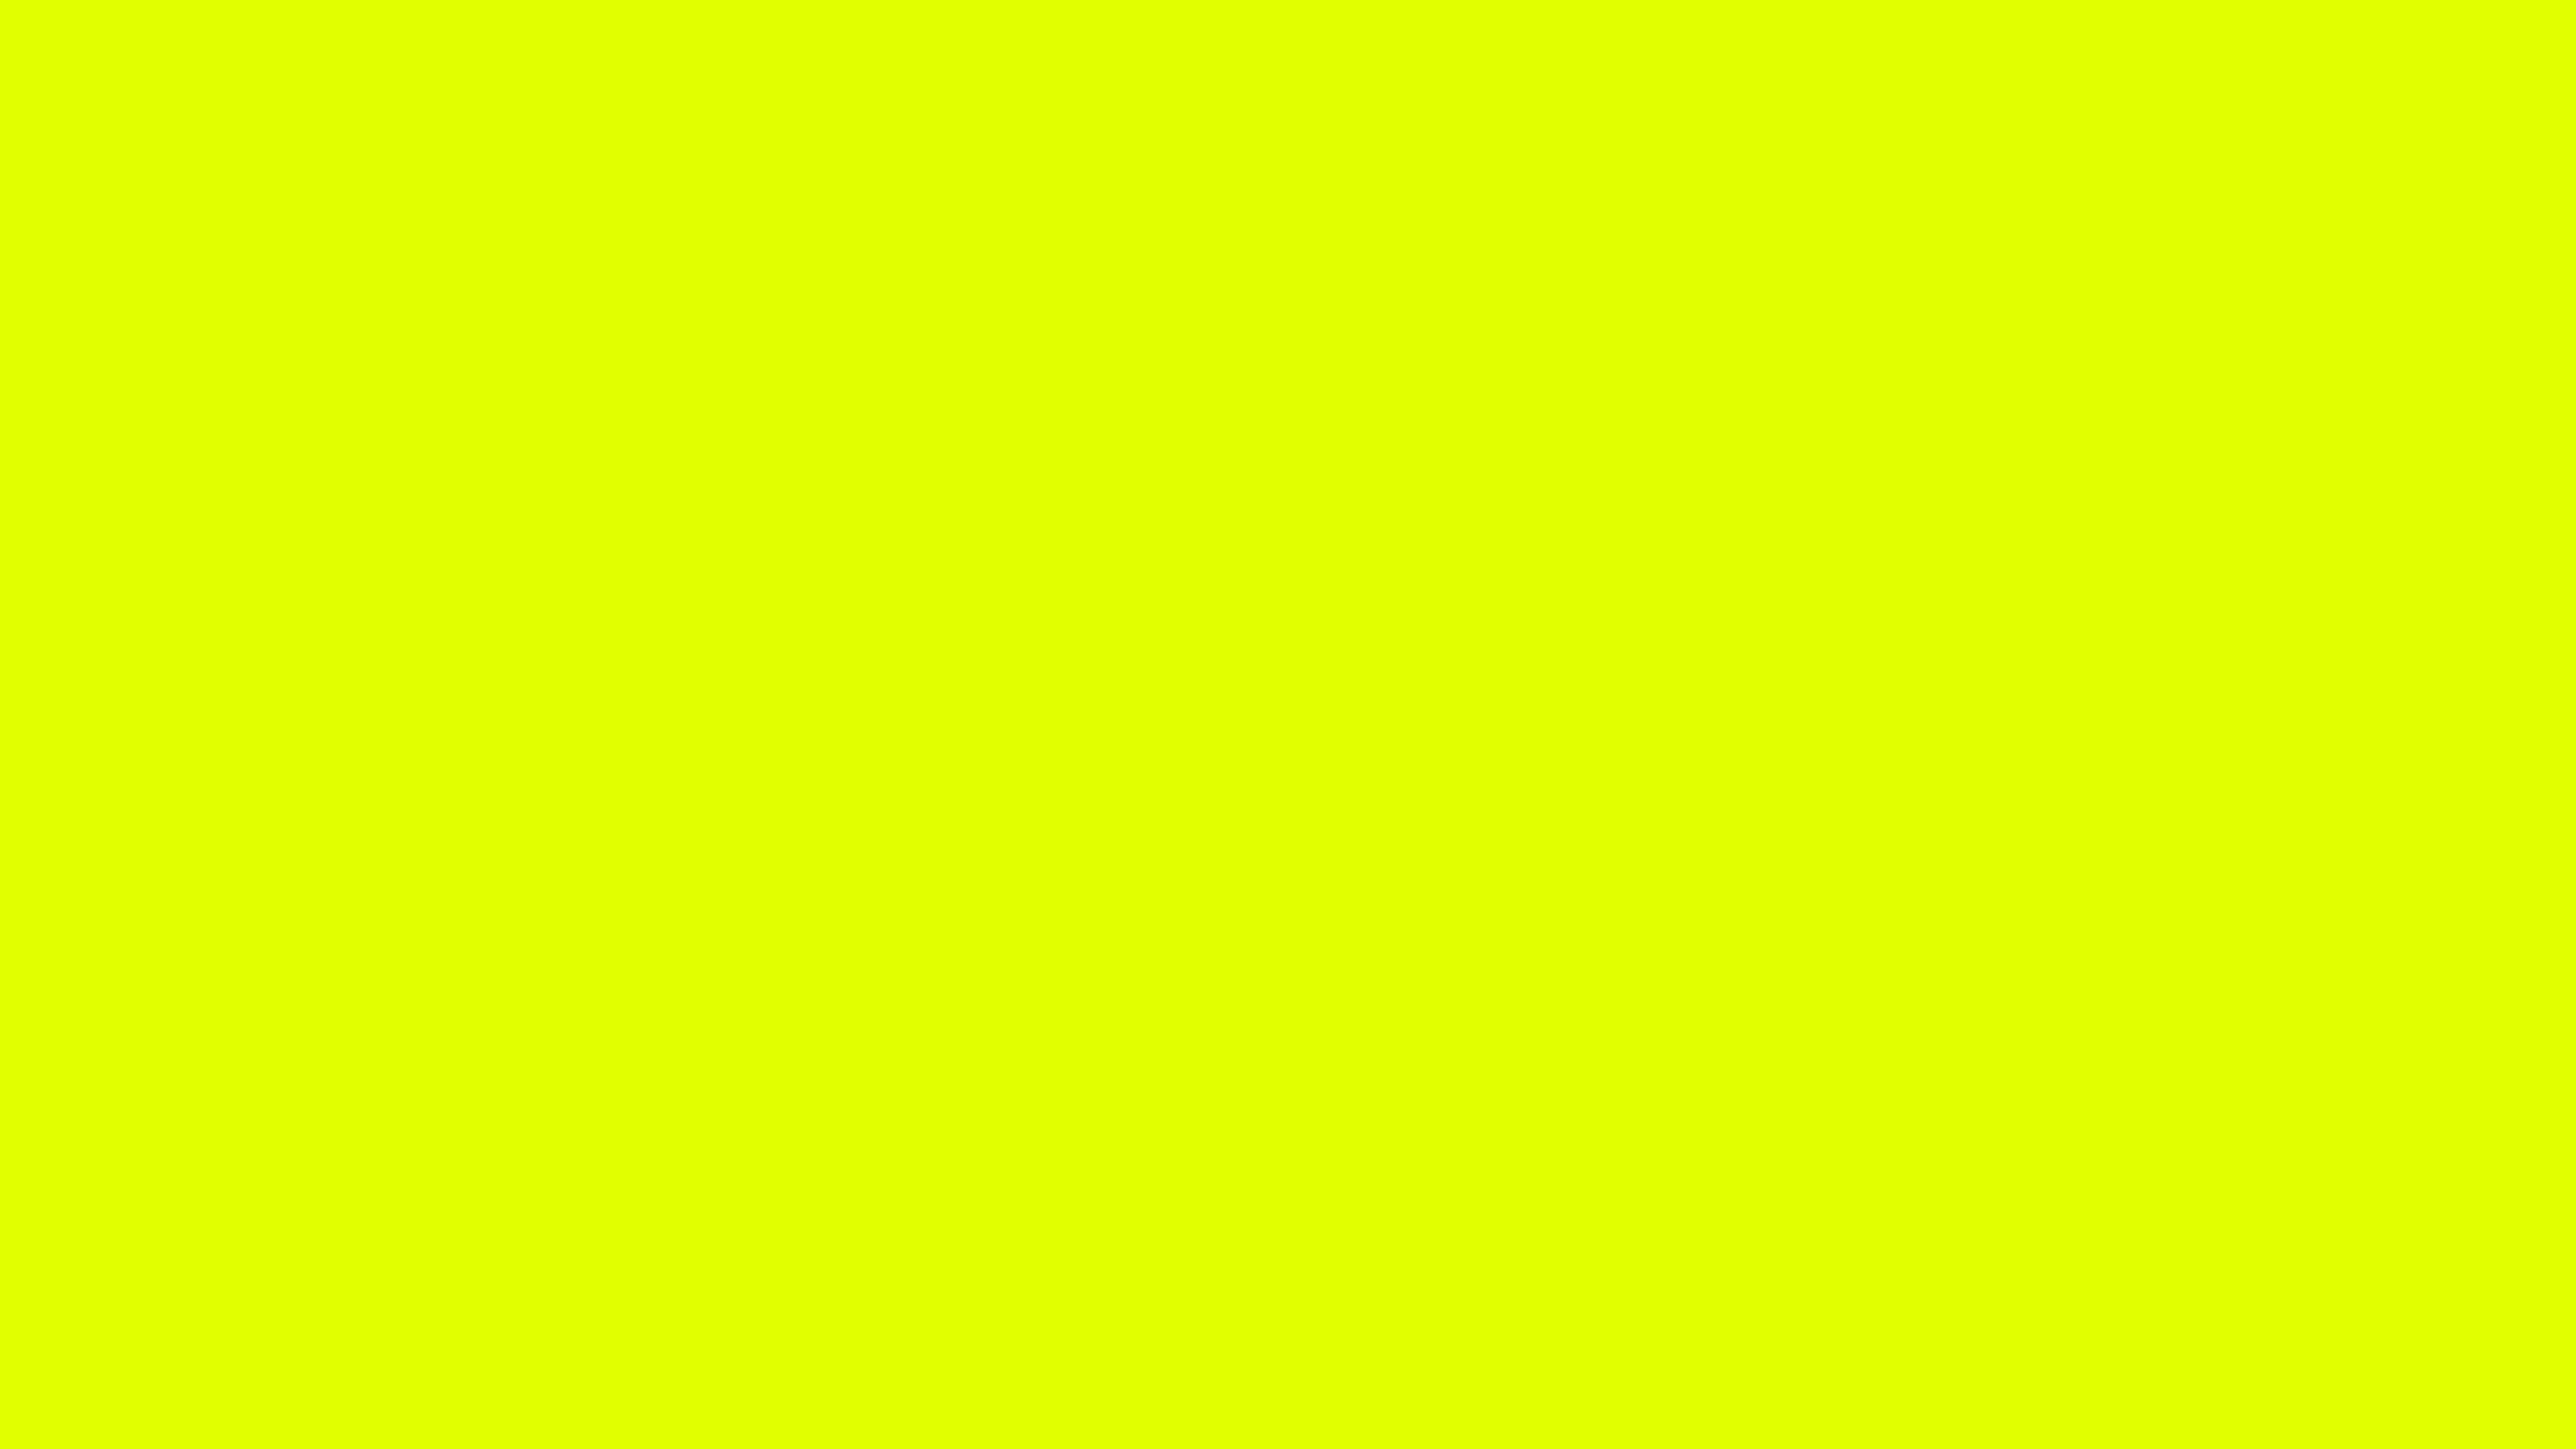 7680x4320 Lemon Lime Solid Color Background